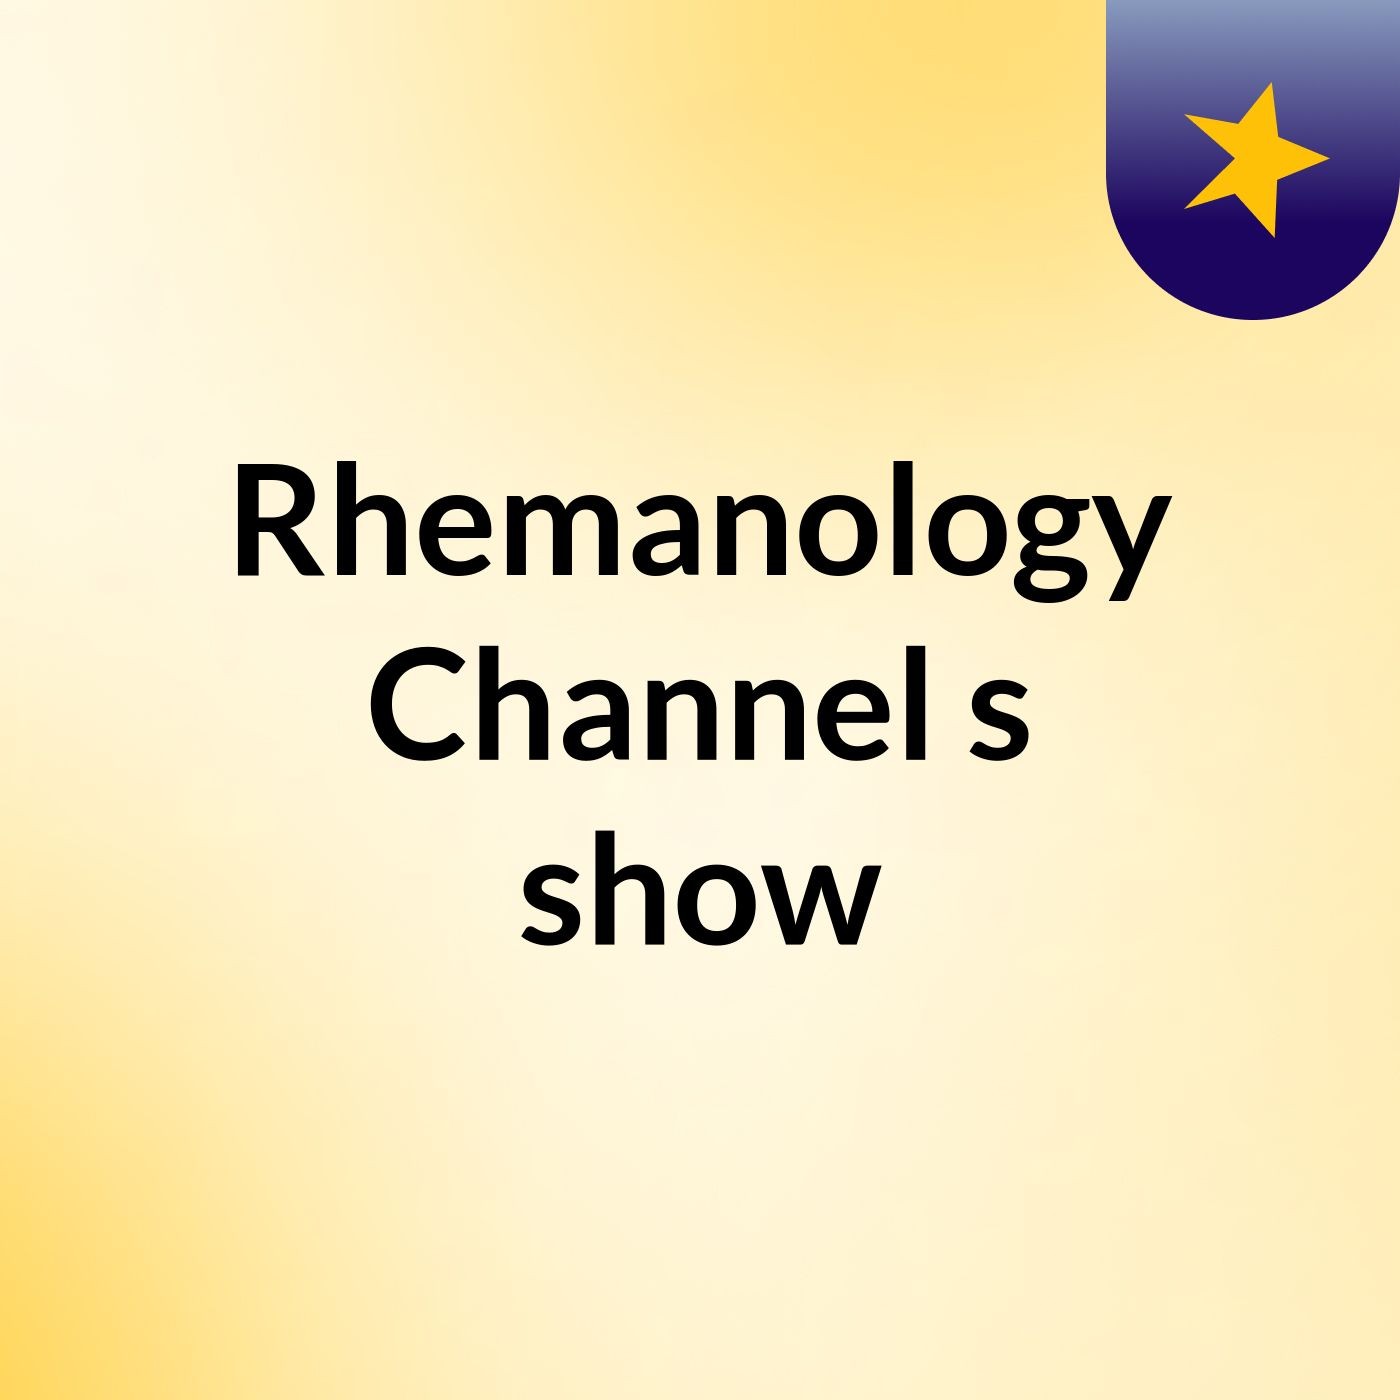 Rhemanology Channel's show